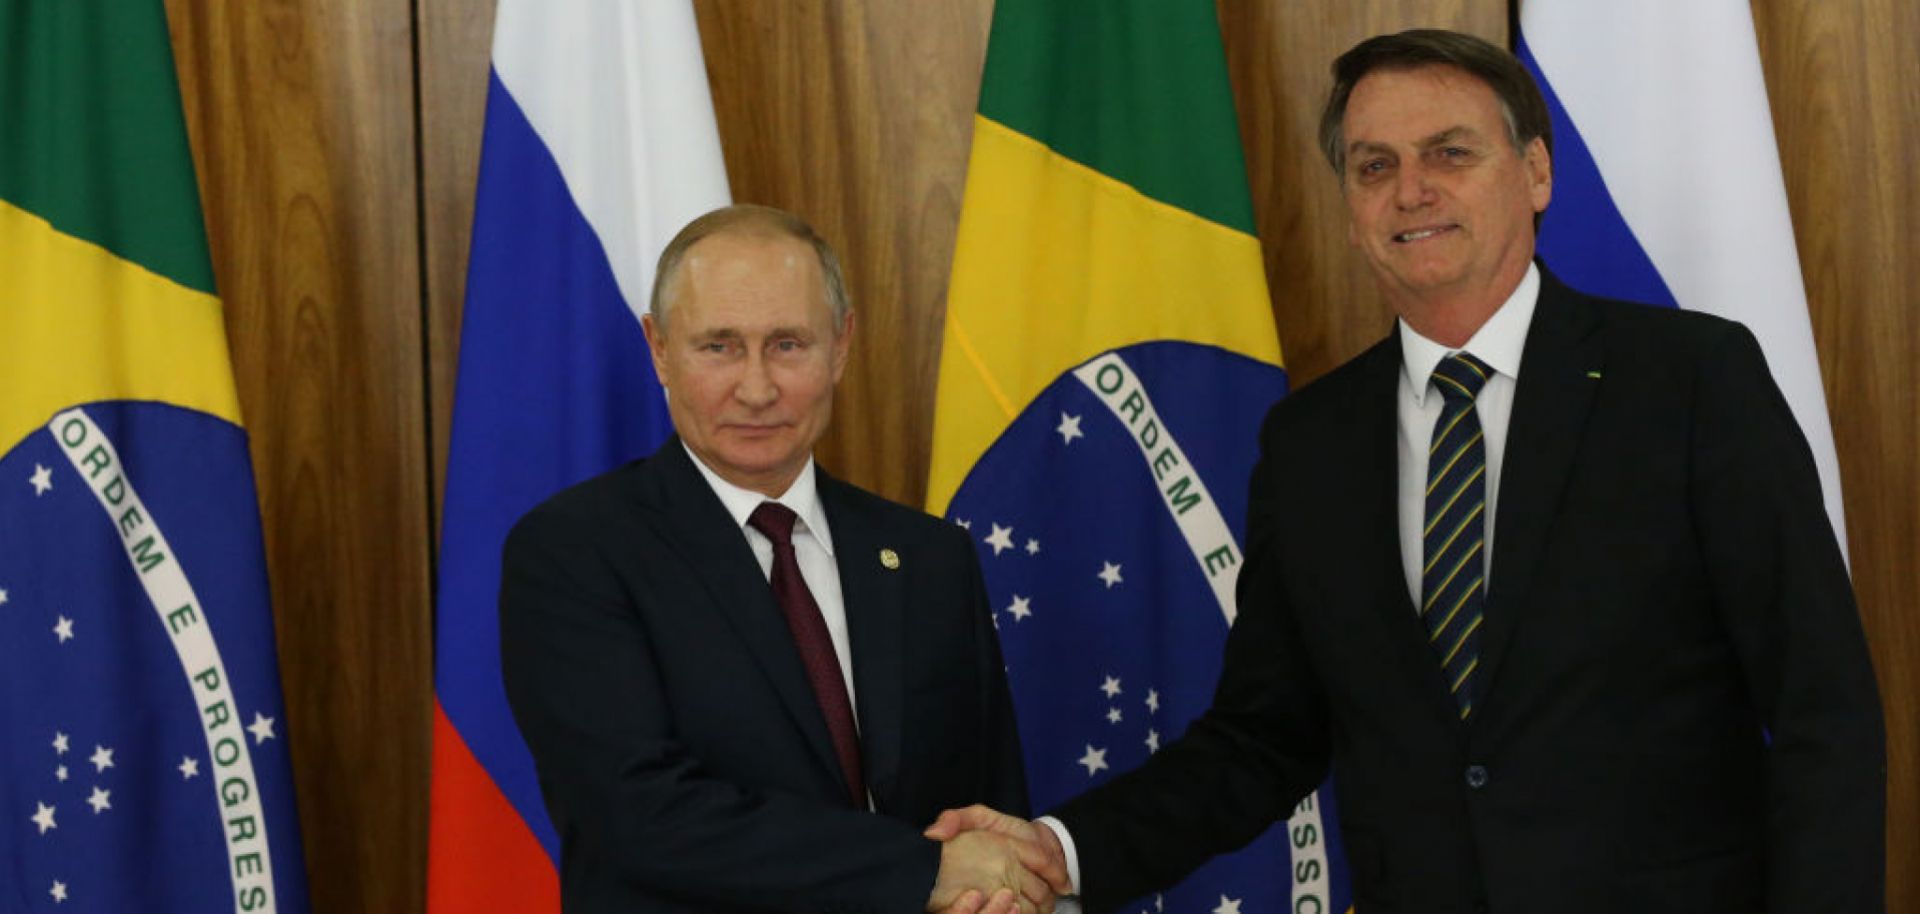 Russian President Vladimir Putin (L) greets Brazilian President Jair Bolsonaro on Nov. 14, 2019, in Brasilia, Brazil, on the sidelines of a BRICS summit.